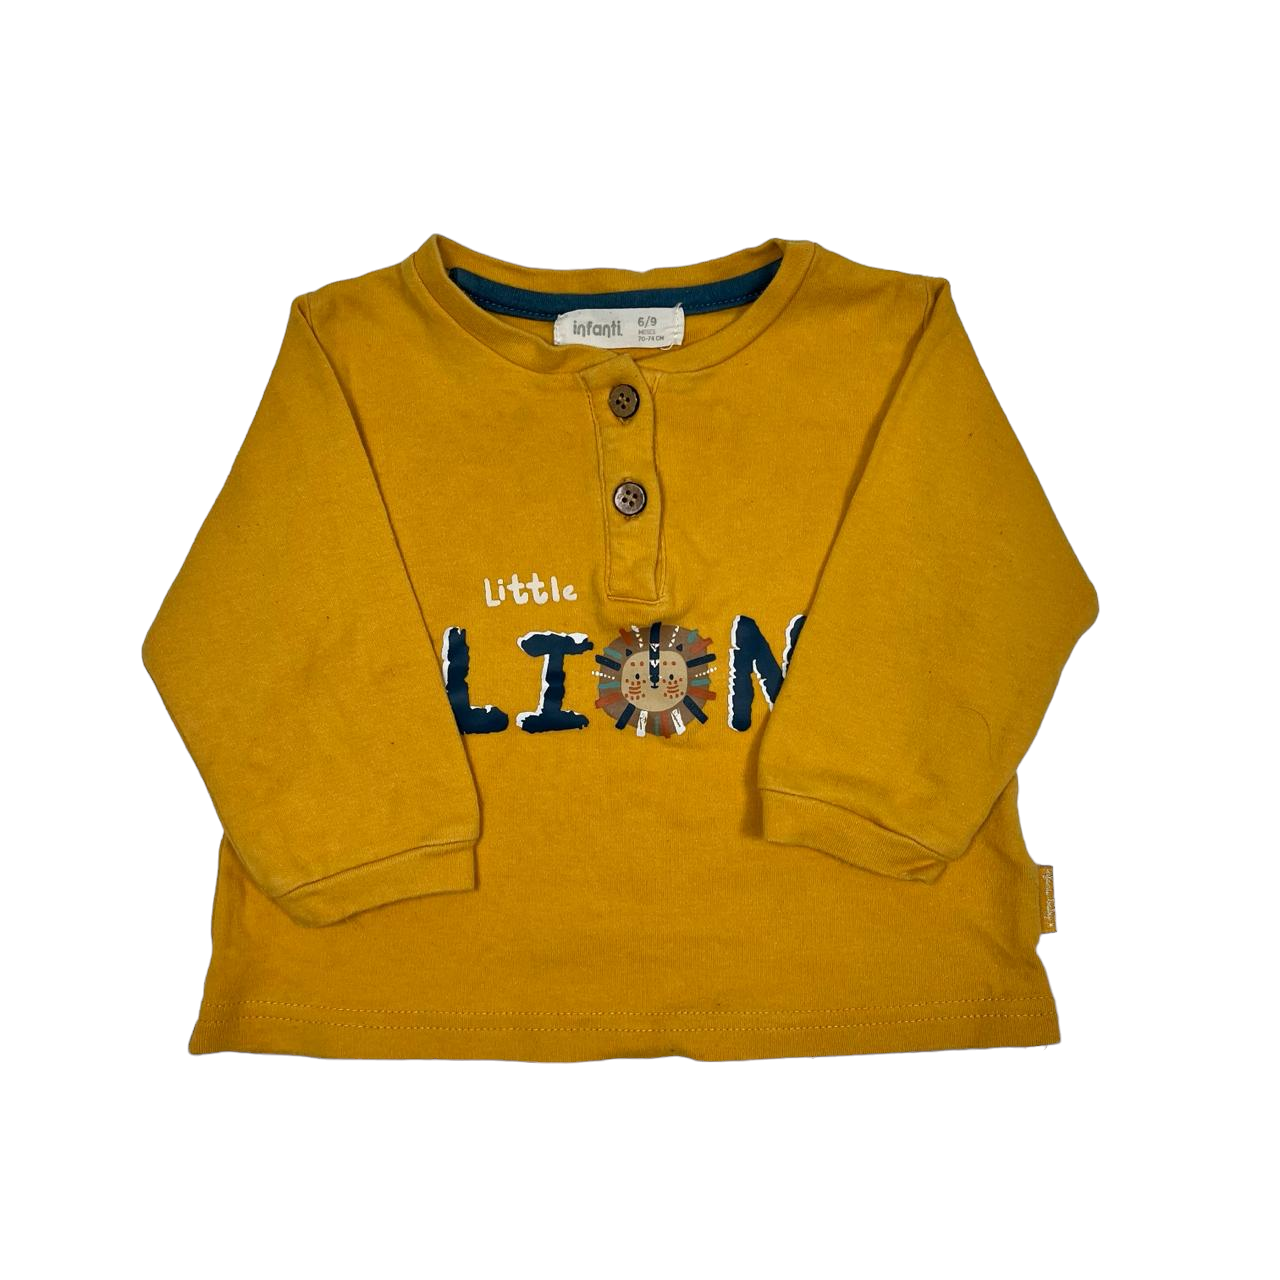 Polera amarilla diseño de leon little lion